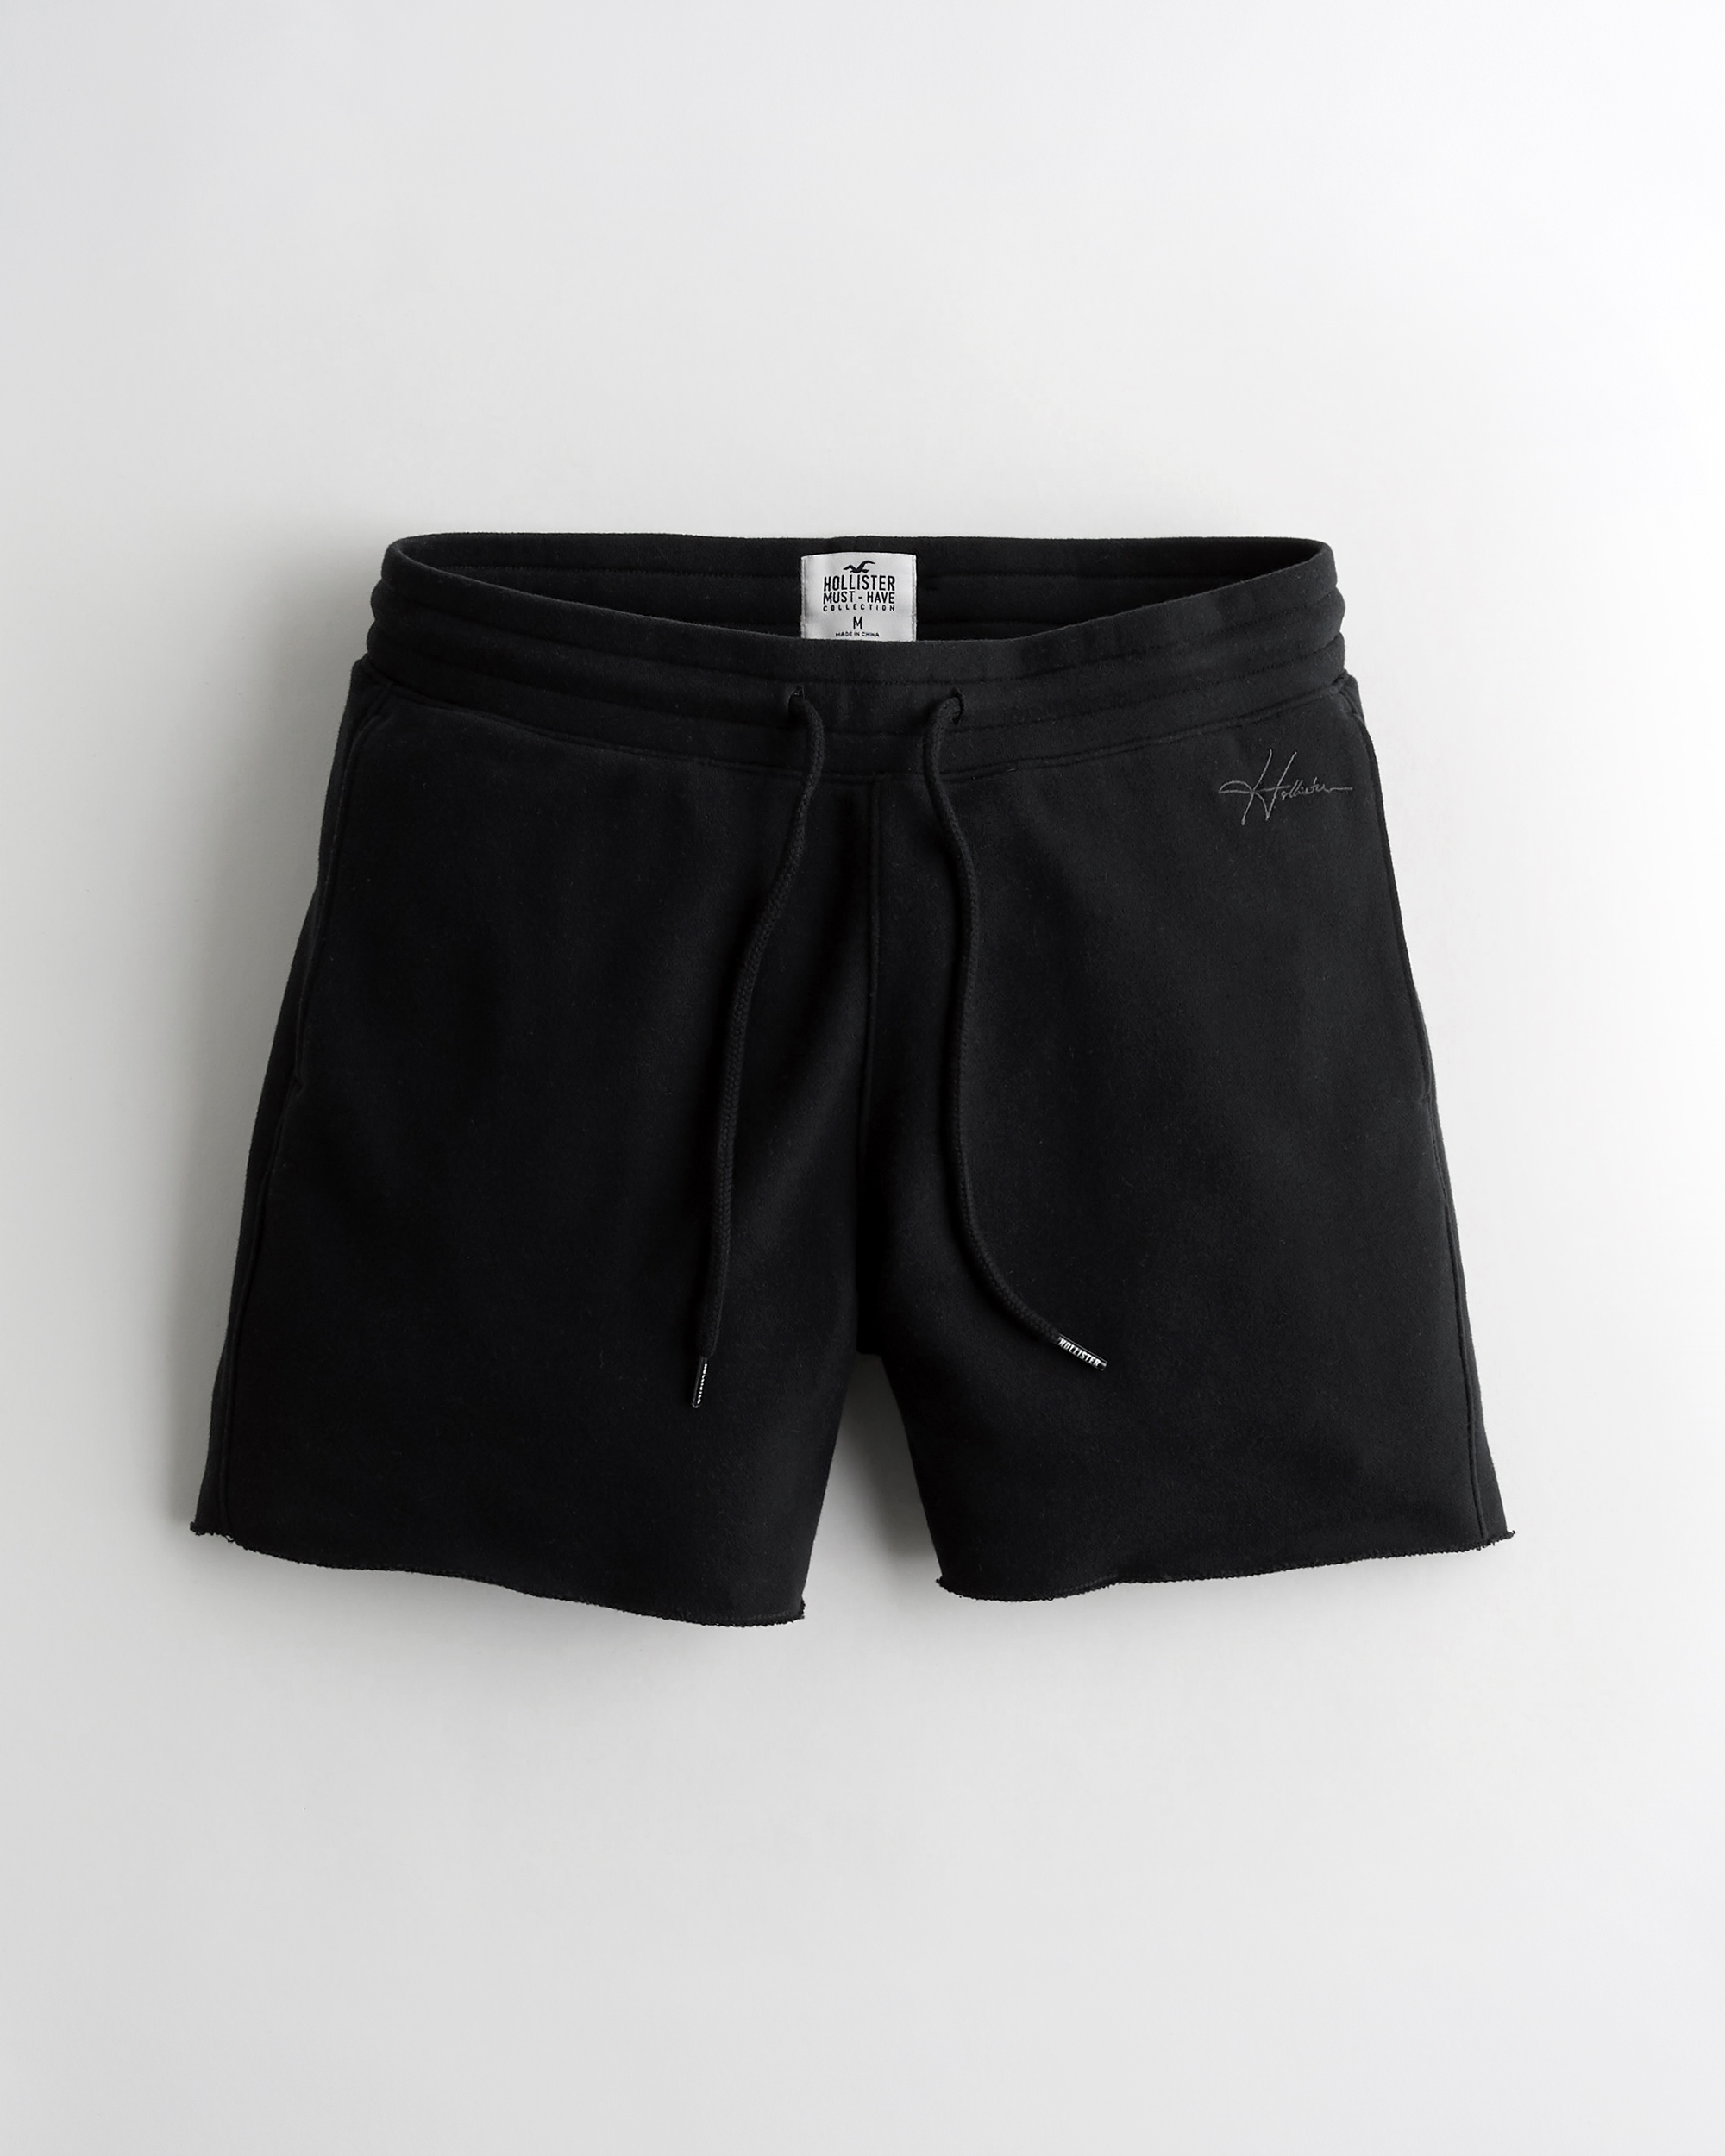 hollister mens shorts sale